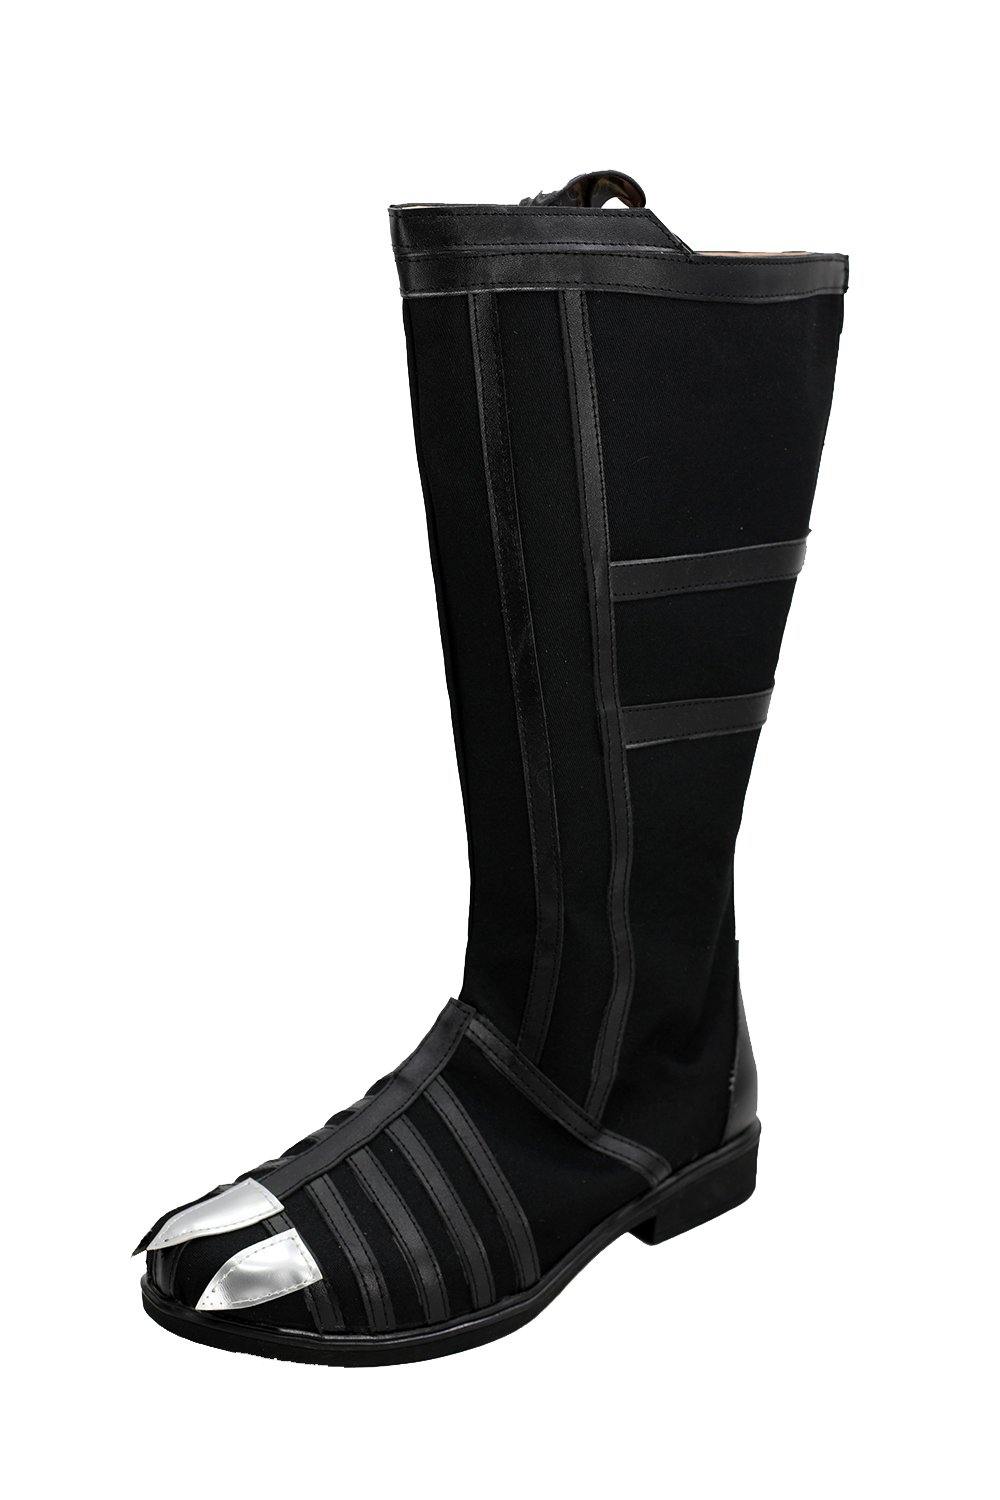 Civil War Black Panther Schuhe Stiefel Cosplay Schuhe - cosplaycartde